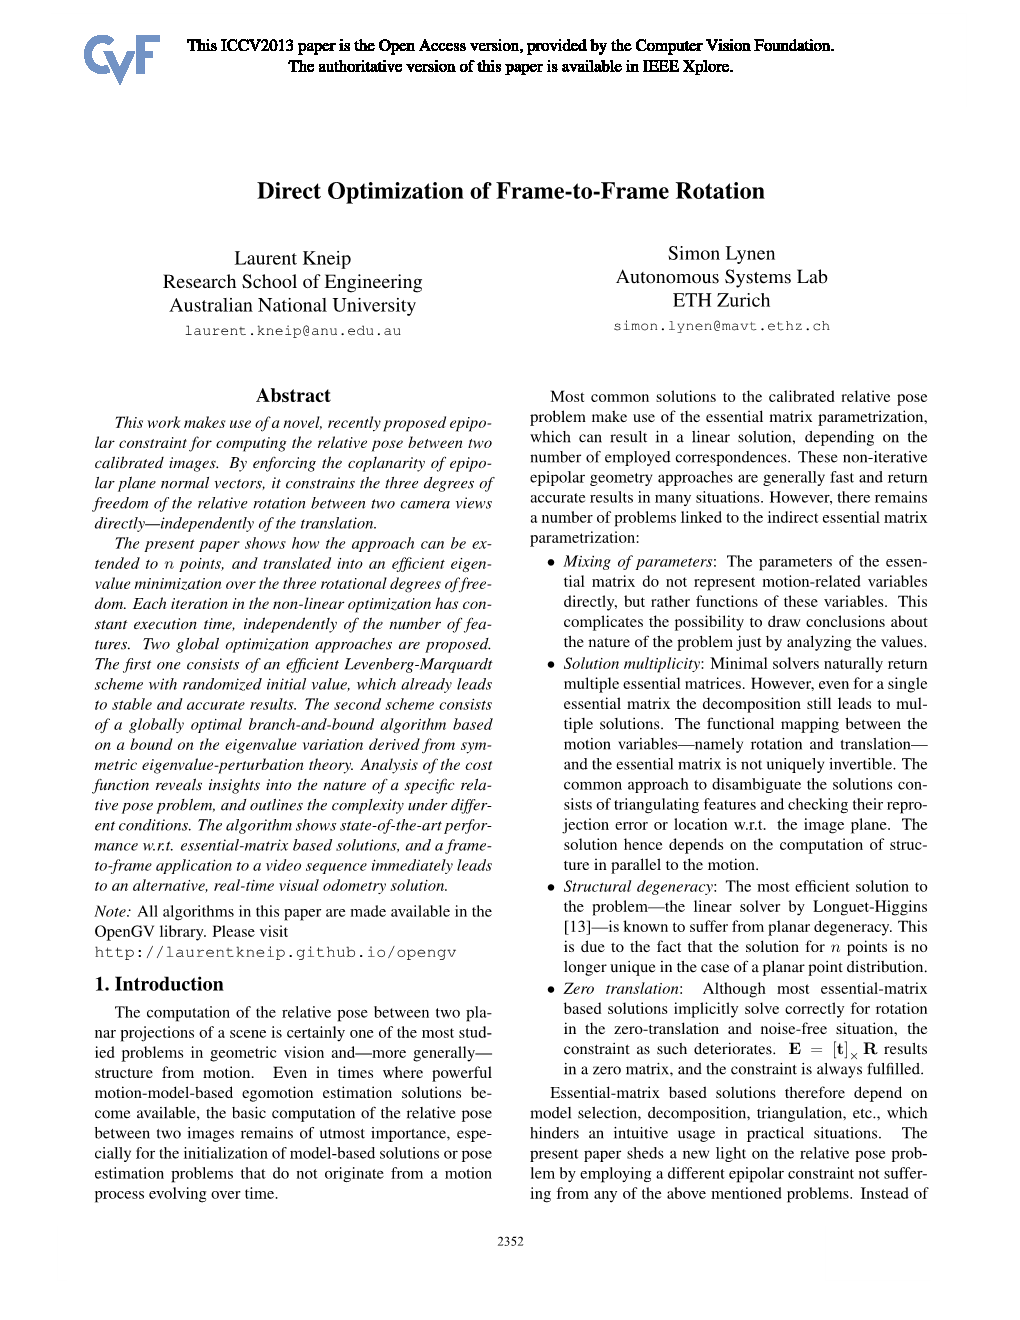 Direct Optimization of Frame-To-Frame Rotation